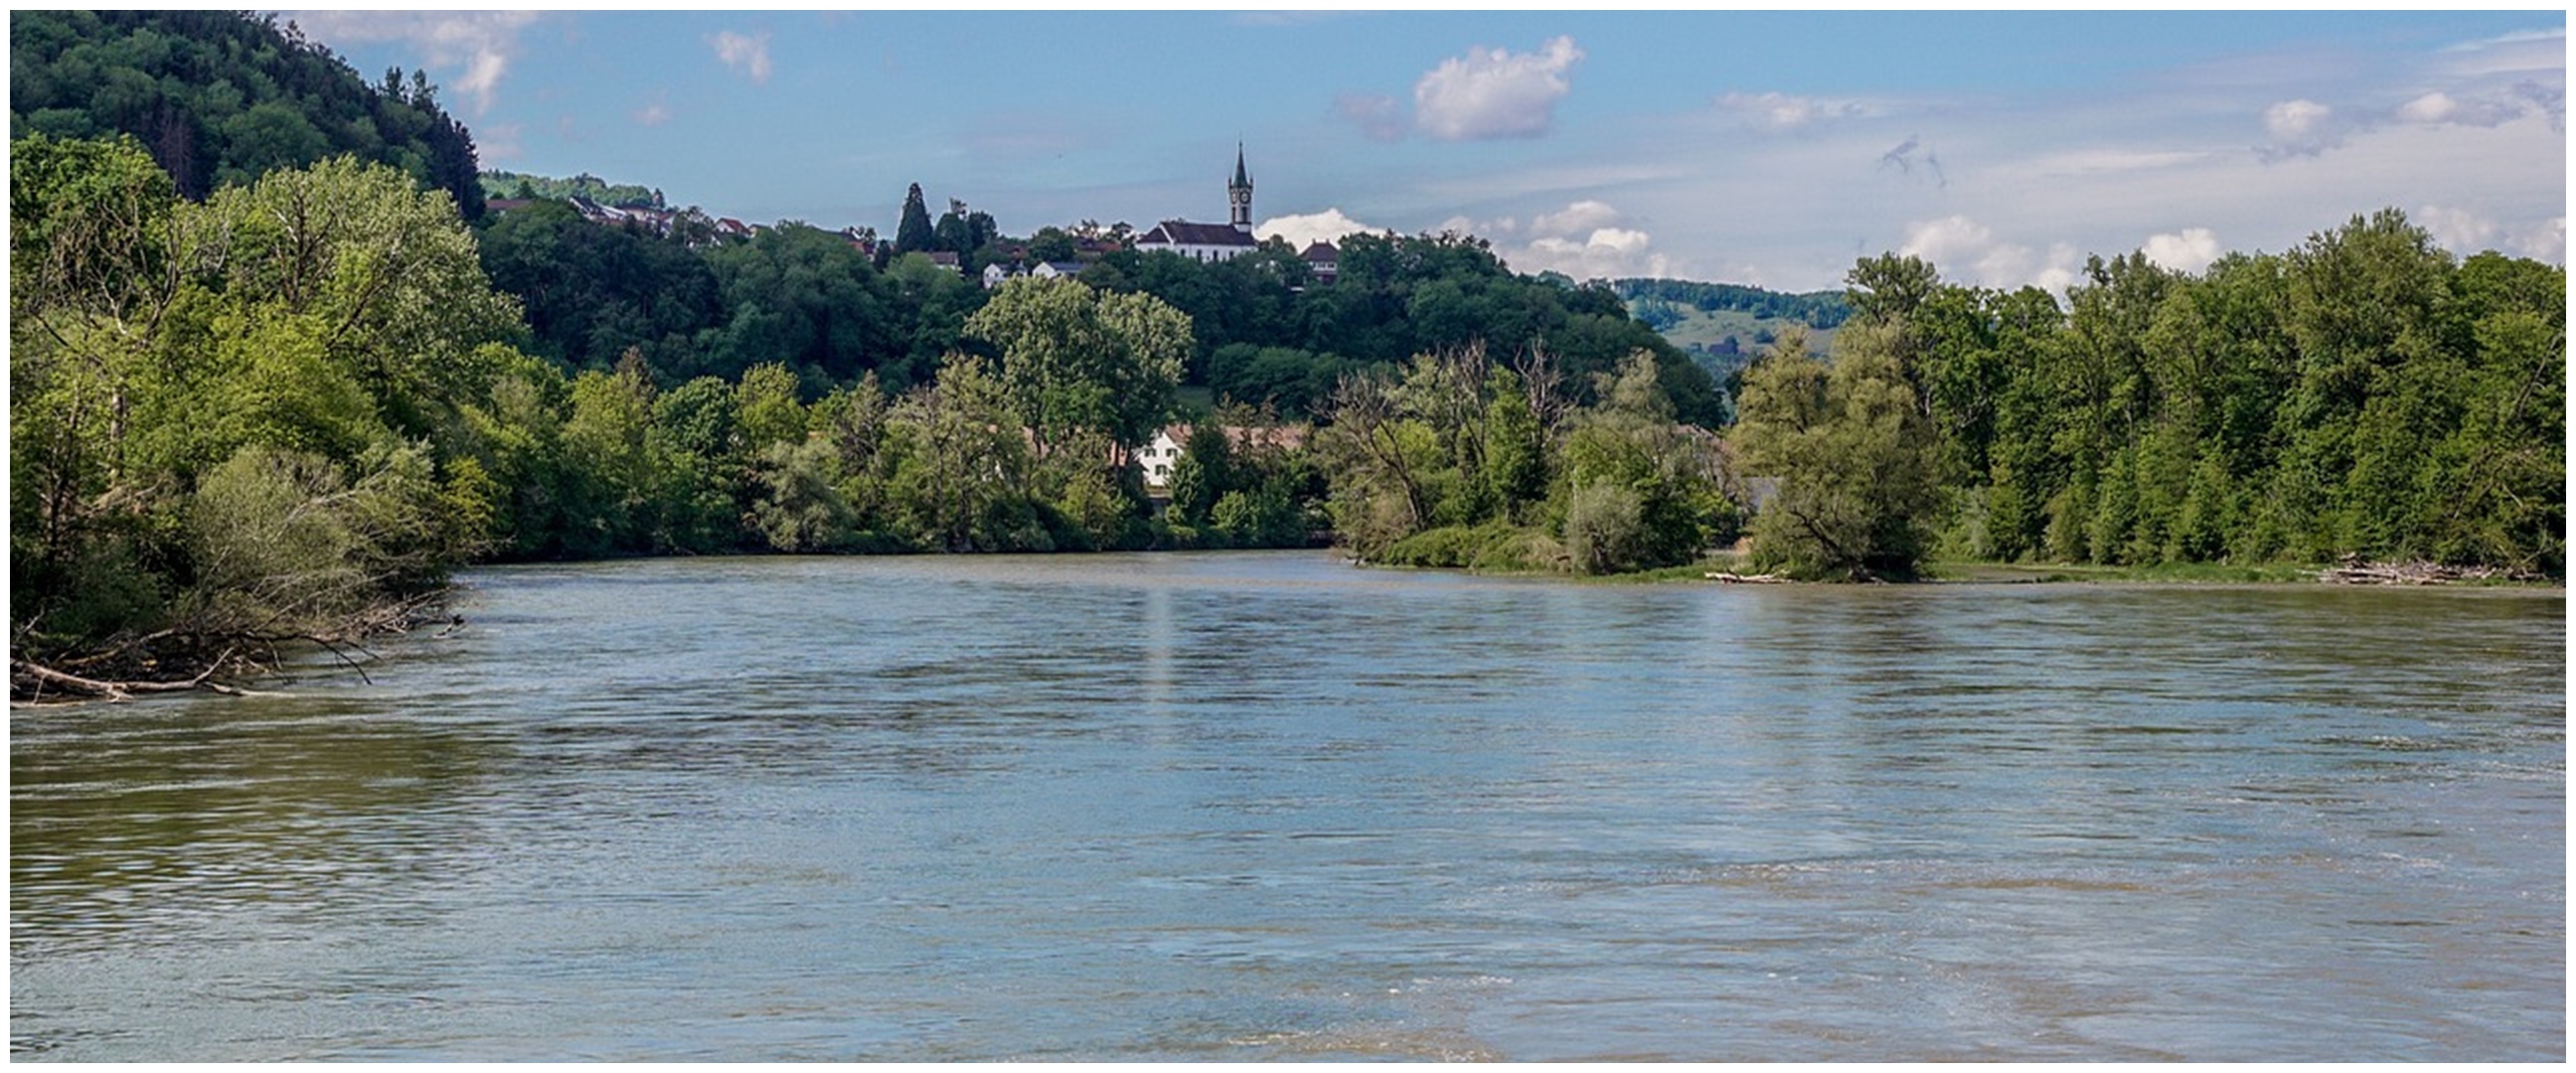 Bukan di Swiss, penampakan sungai jernih di Kebumen ini layaknya Sungai Aare